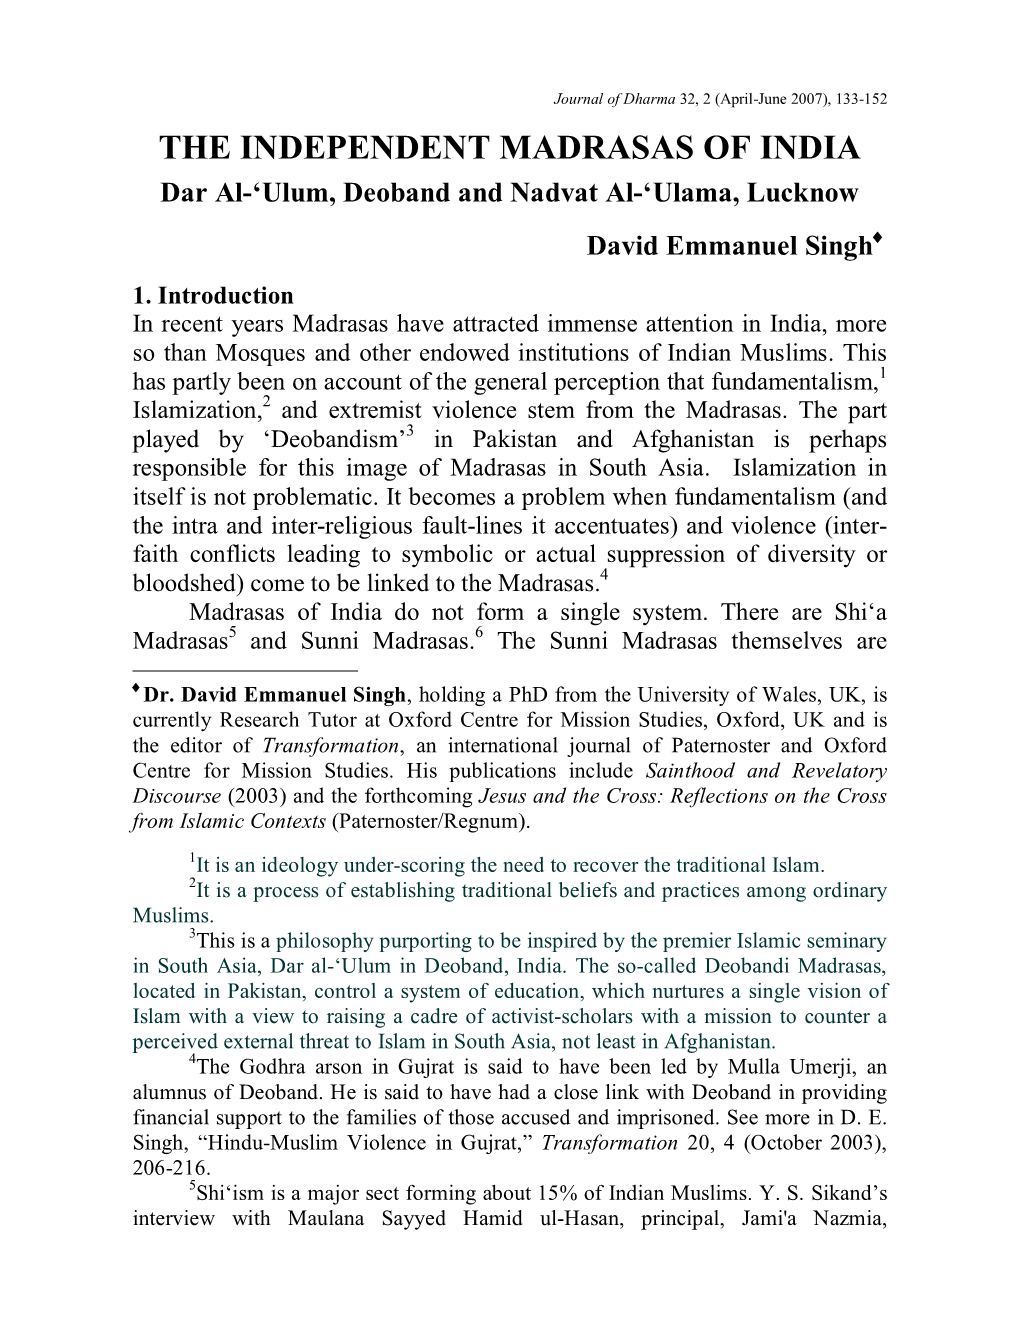 THE INDEPENDENT MADRASAS of INDIA Dar Al-‘Ulum, Deoband and Nadvat Al-‘Ulama, Lucknow David Emmanuel Singh 1